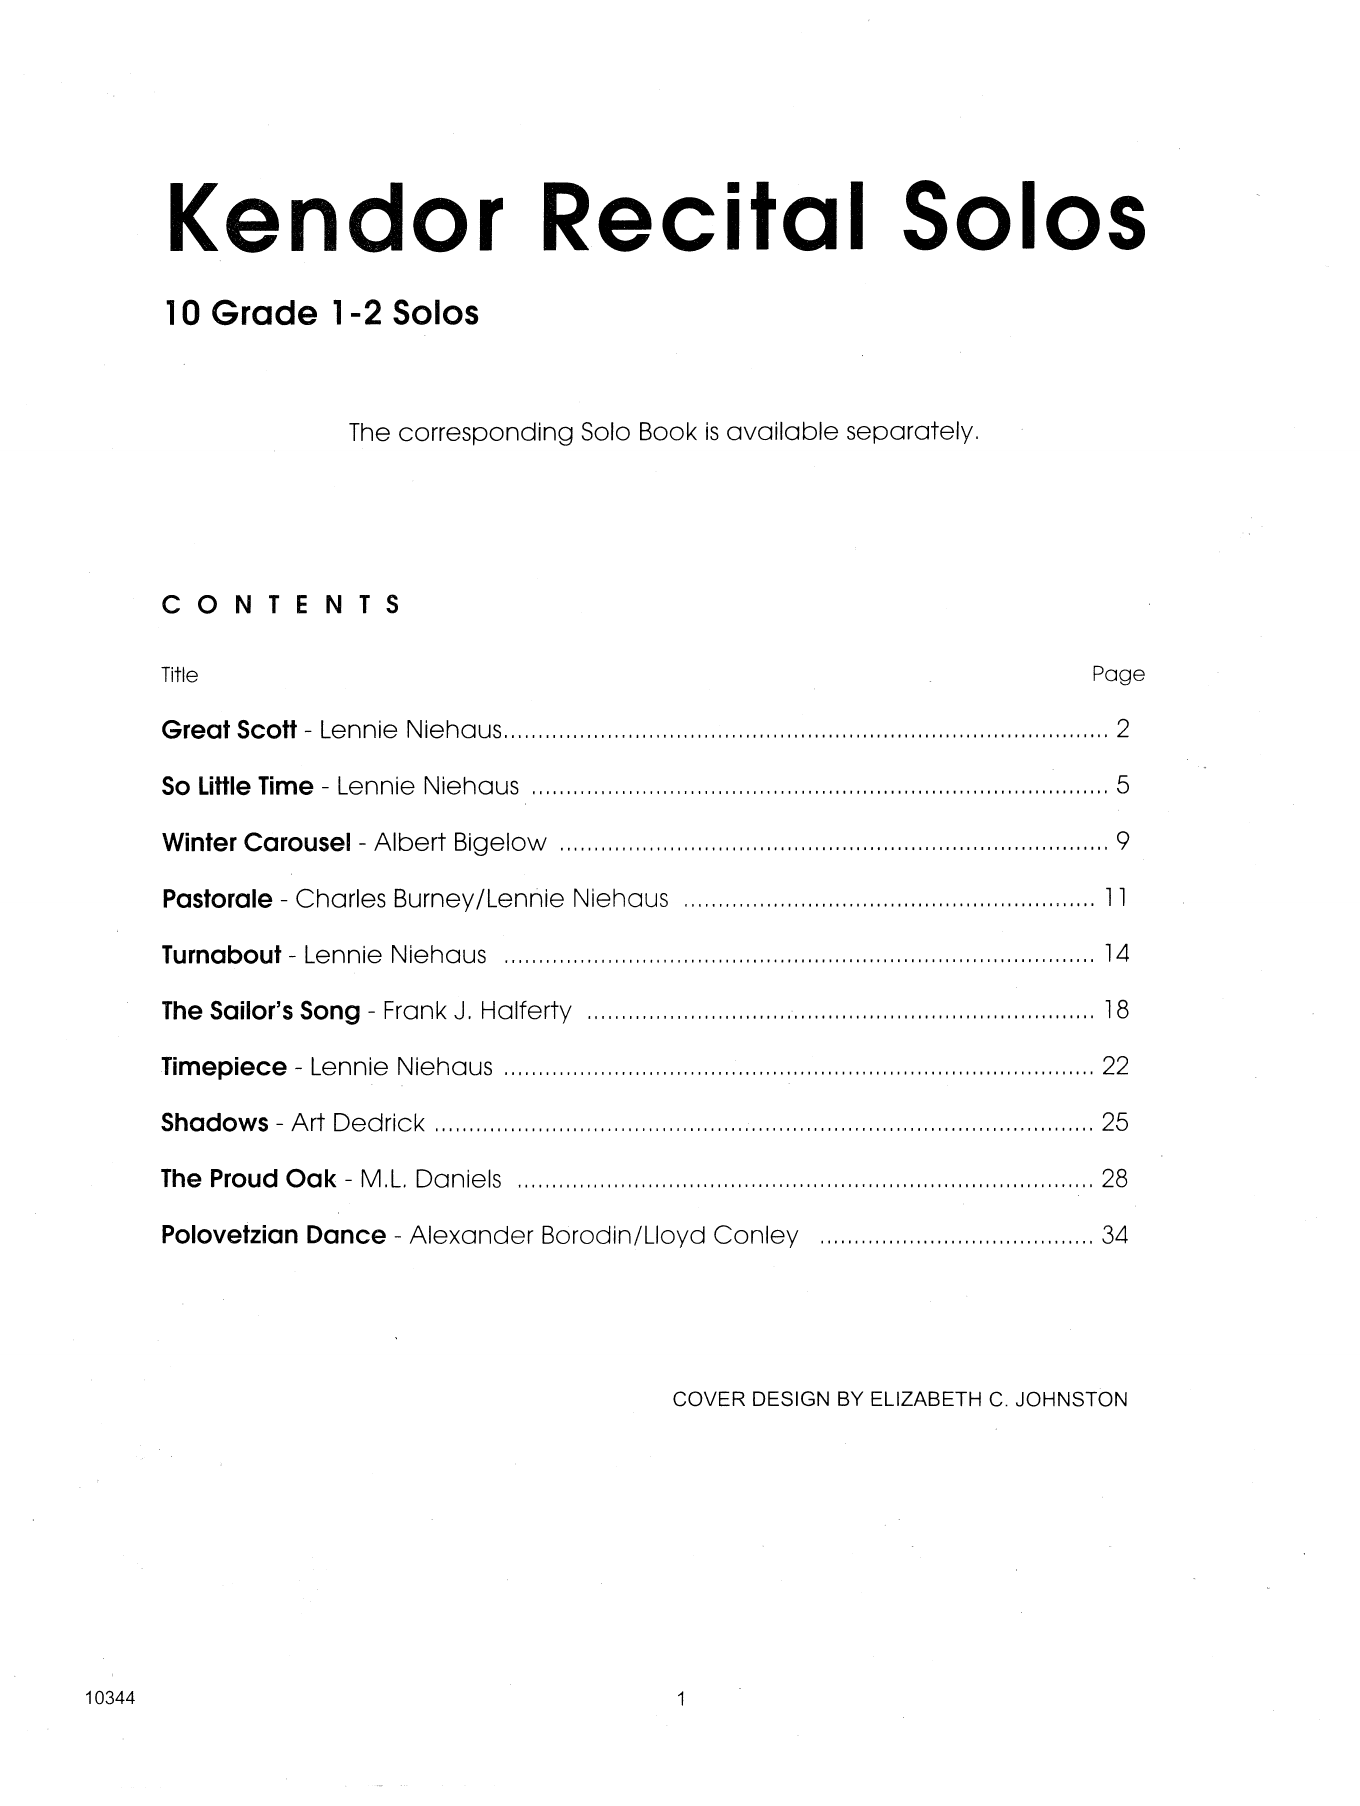 Download Various Kendor Recital Solos - Trombone - Piano Sheet Music